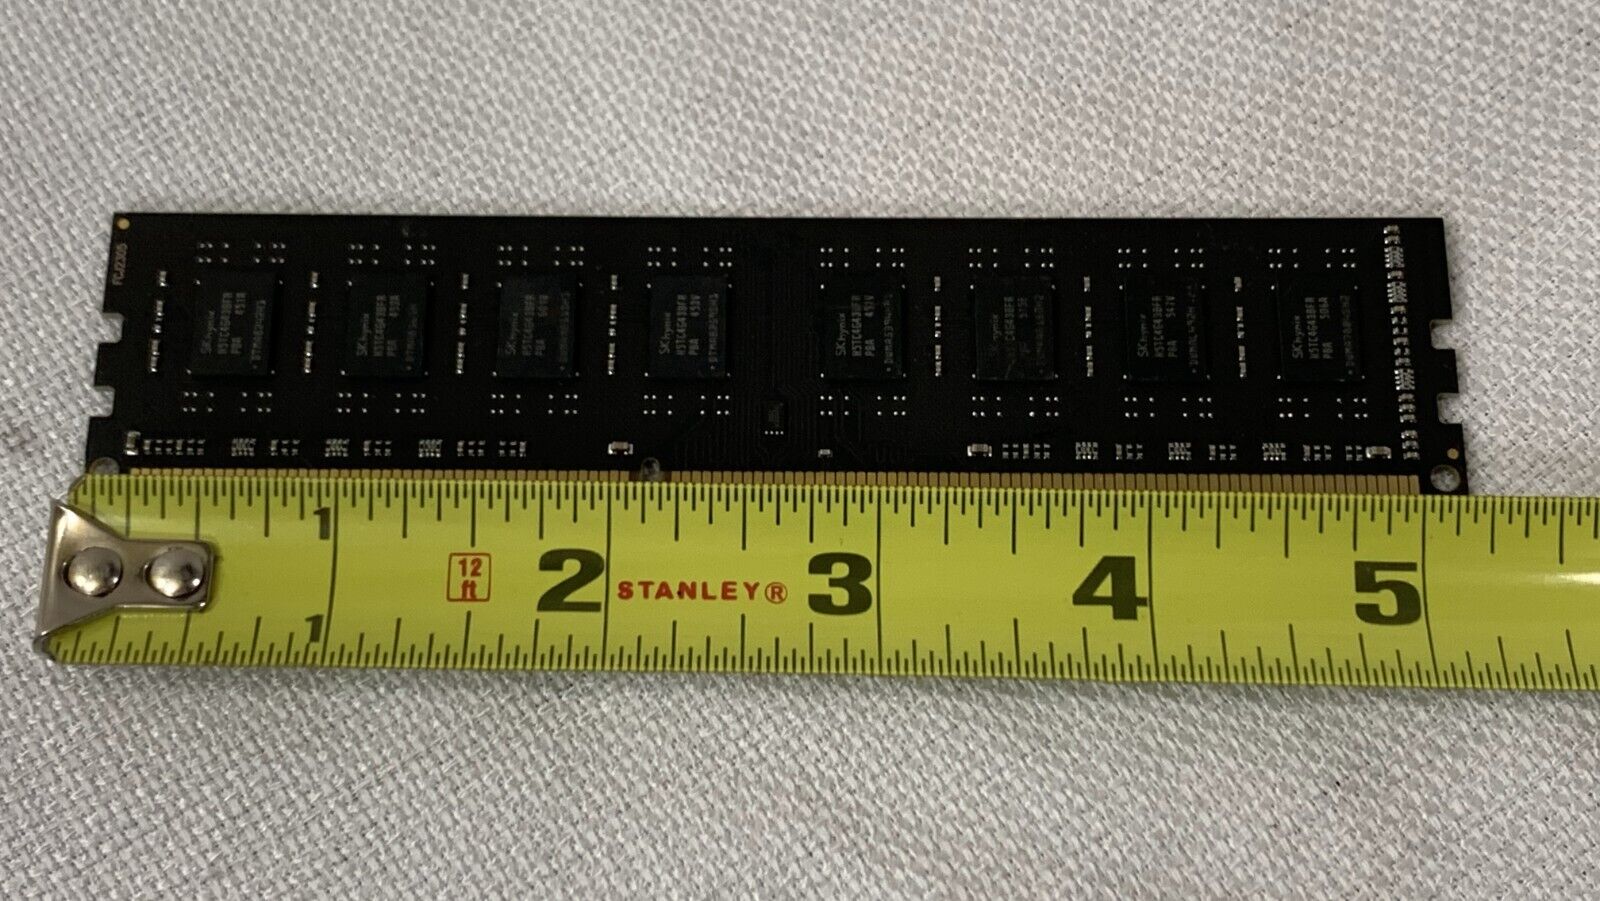 SK Hynix 4Gb DDR3L SDRAM RAM H5TC4G43AFR Memory Sticks (USED) QC TESTED